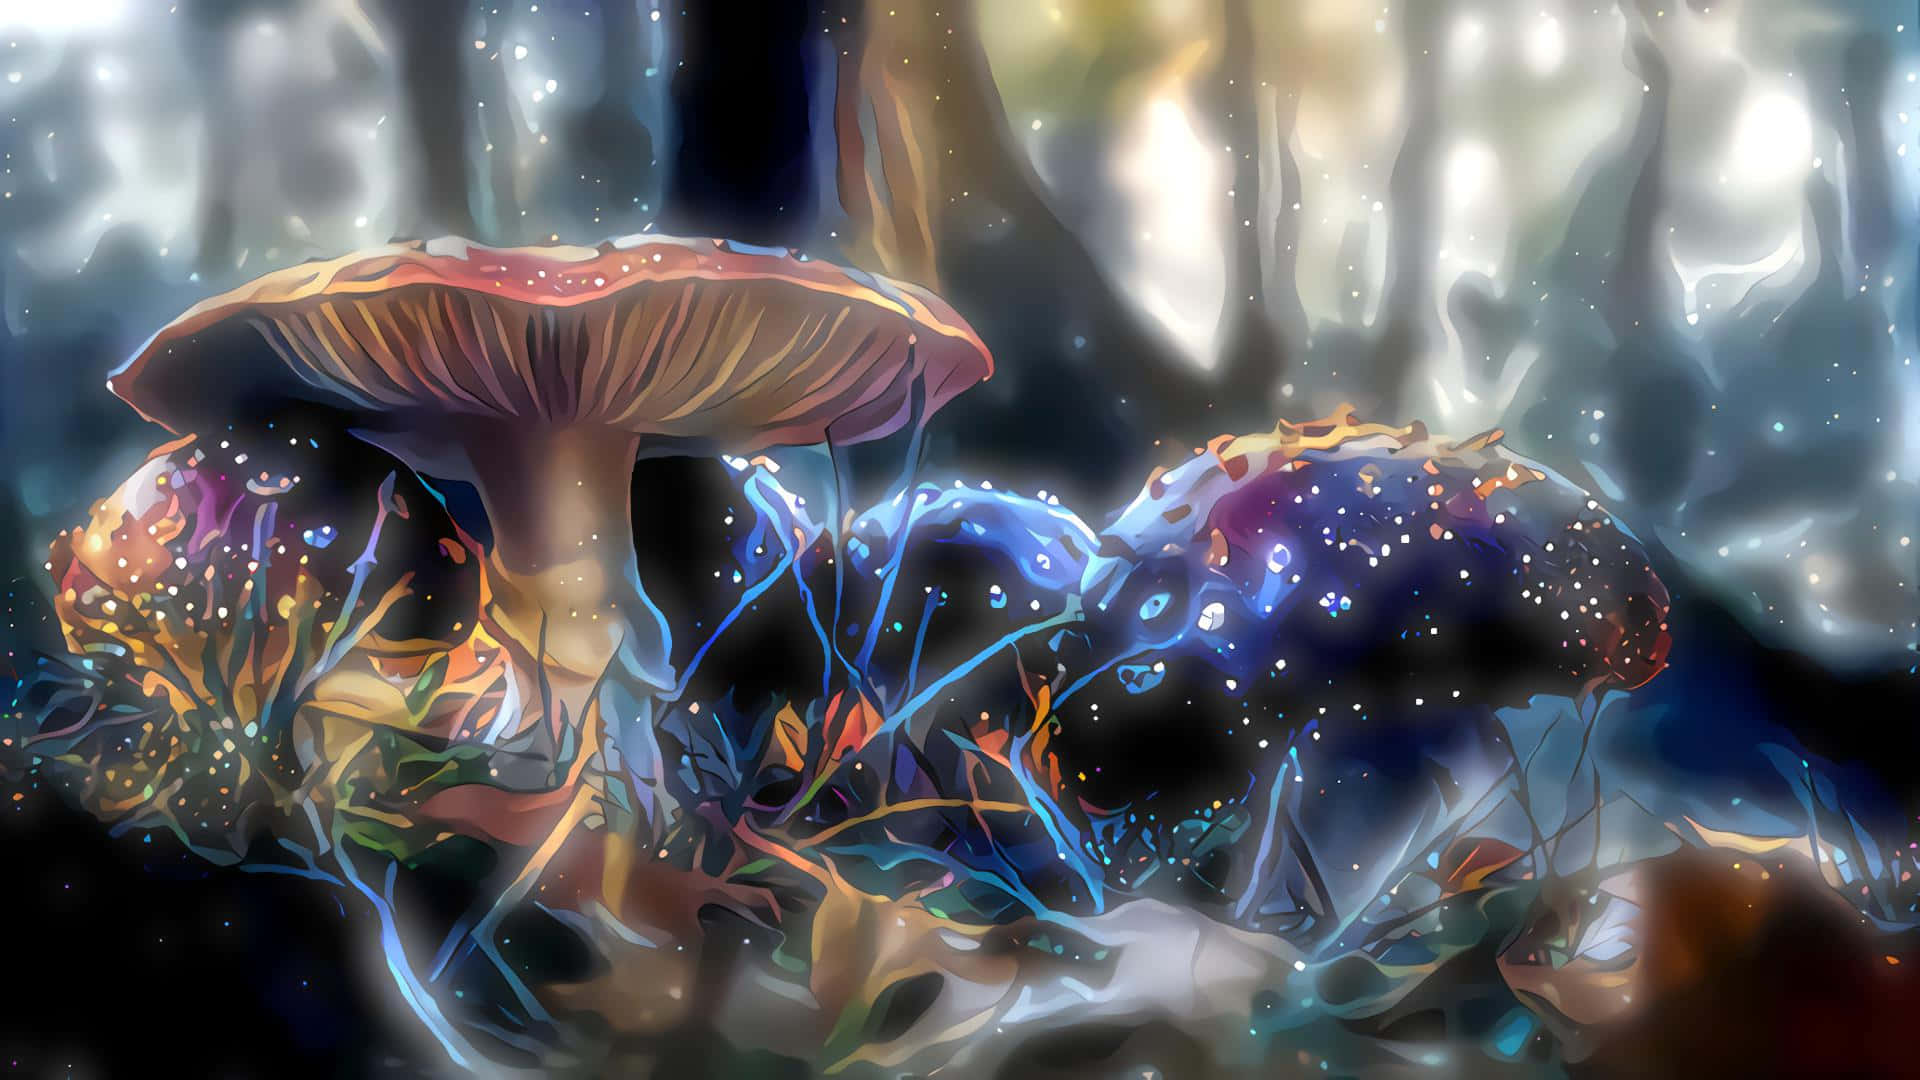 Enchanting Fungus With Glowing Cap Digital Art Background